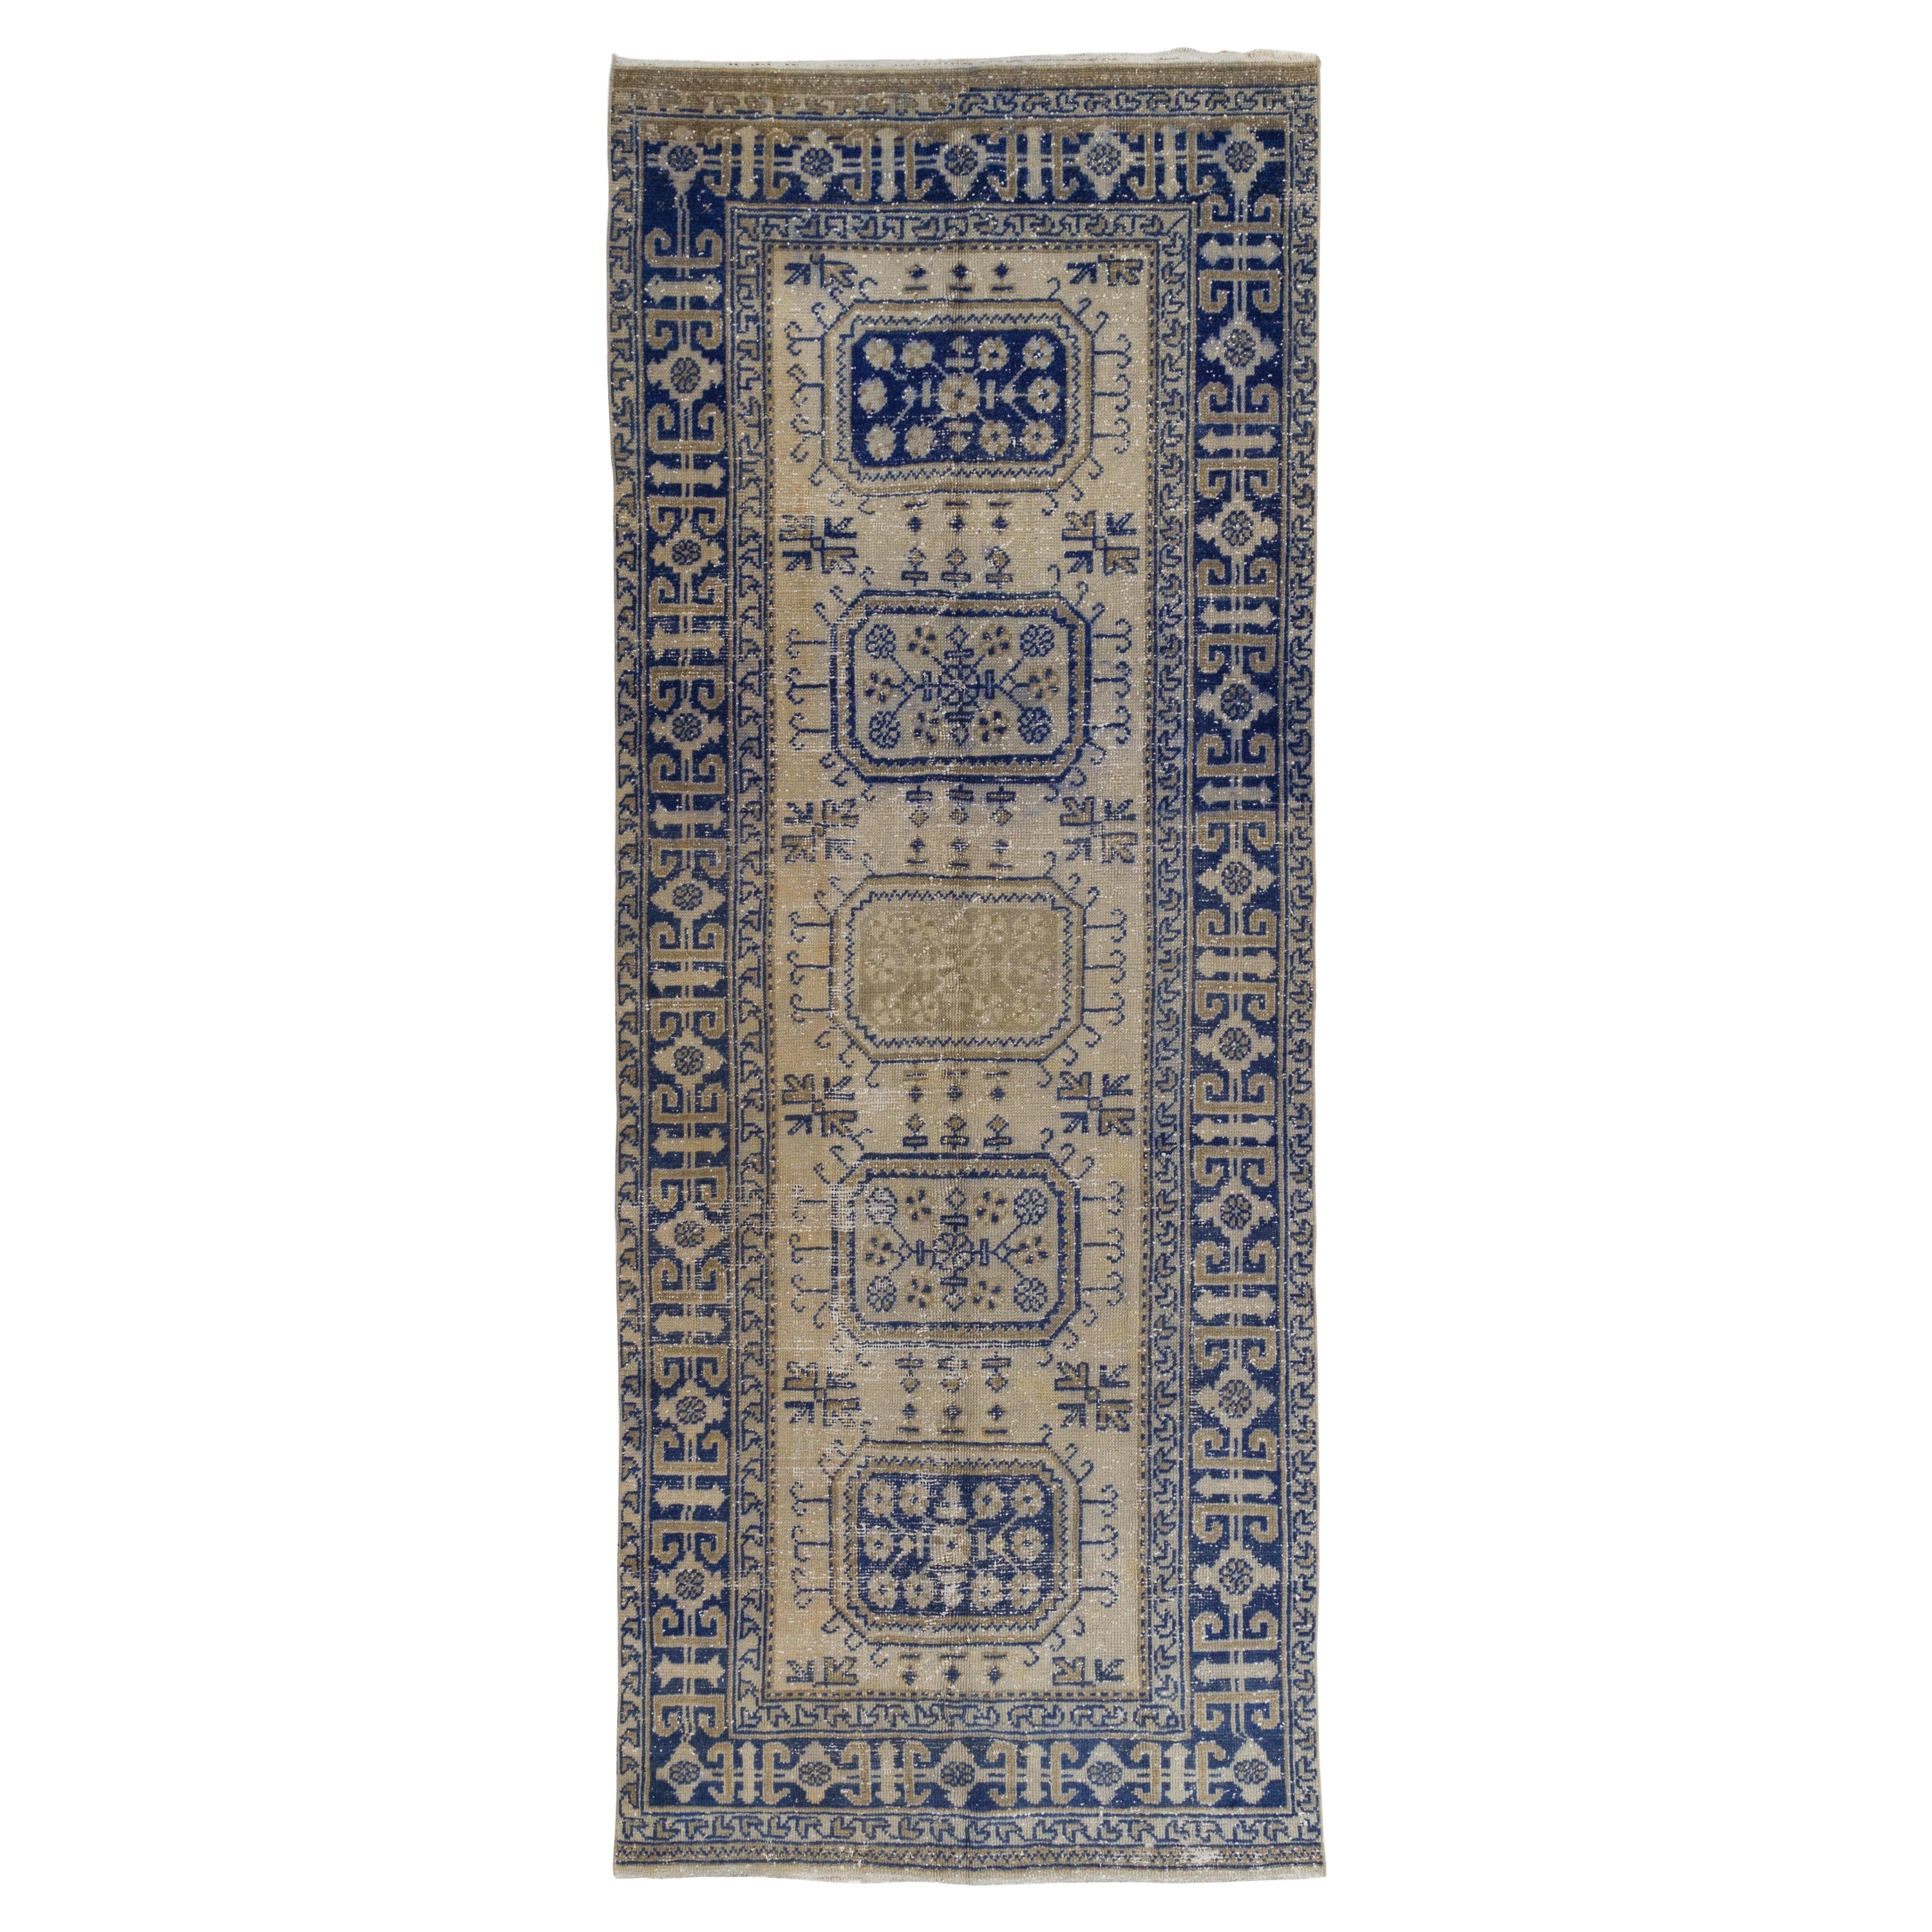 4.8x11.8 Ft Vintage Handmade Oushak Runner Rug in Beige and Navy Blue Colors